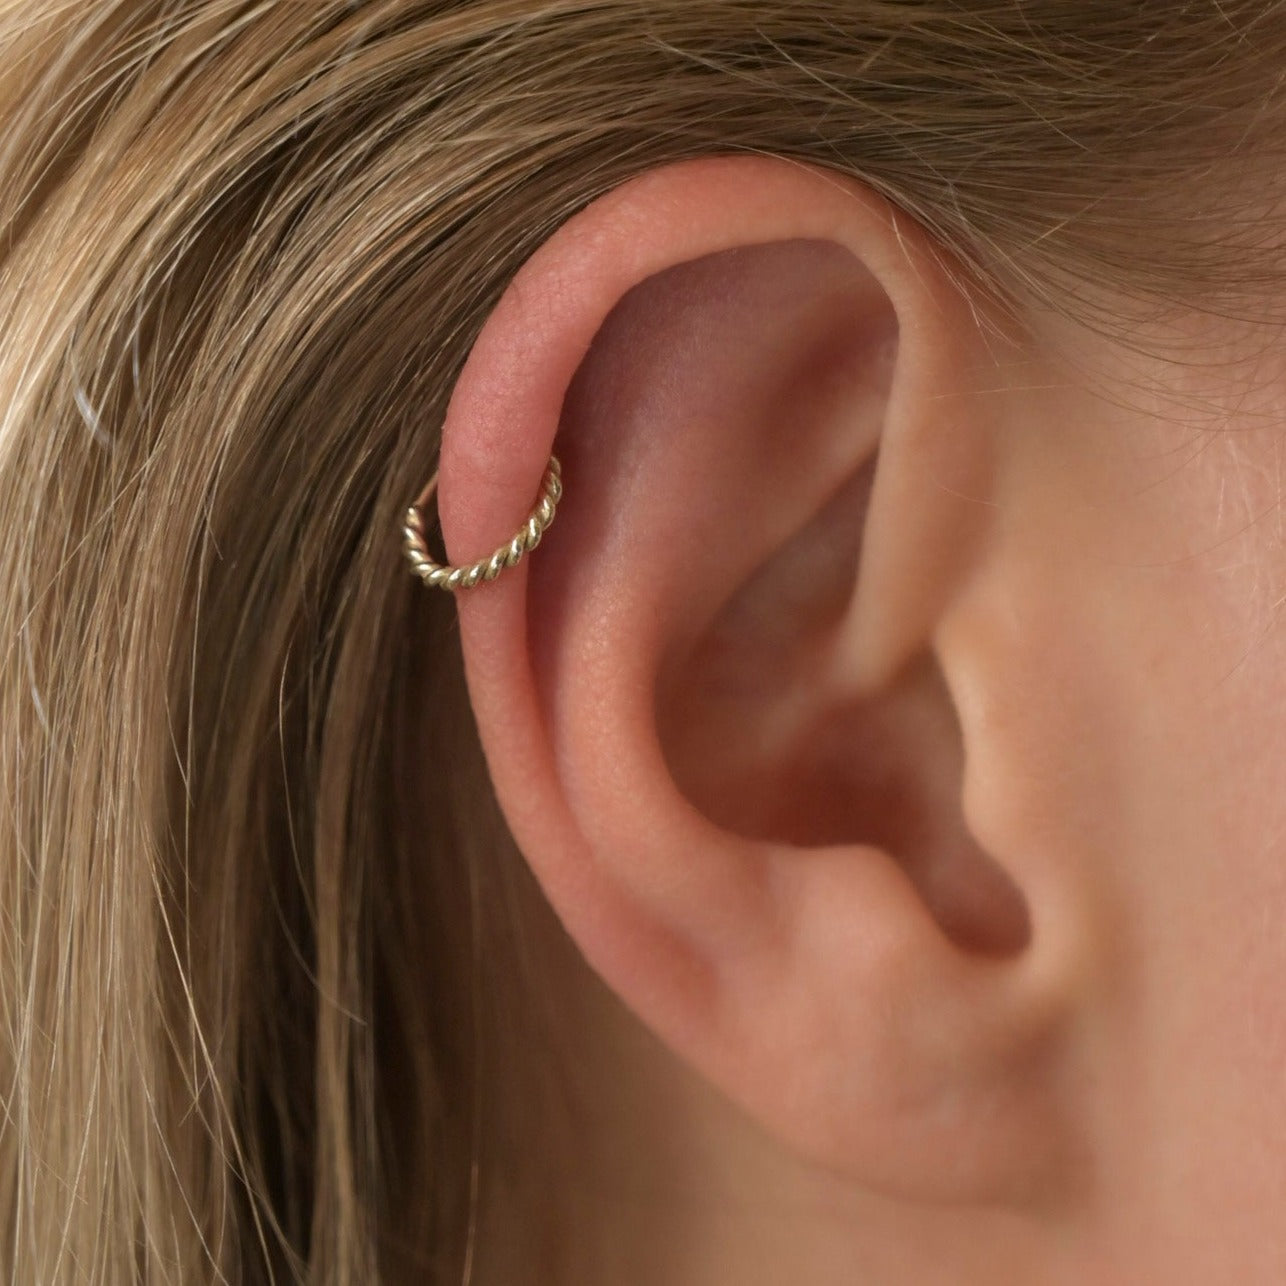 18ct-Gold-Twisted-Cartilage-Helix-Hoop-Earrings_05d9ed7e-2bd0-4349-9123-b43ac11fc554.jpg